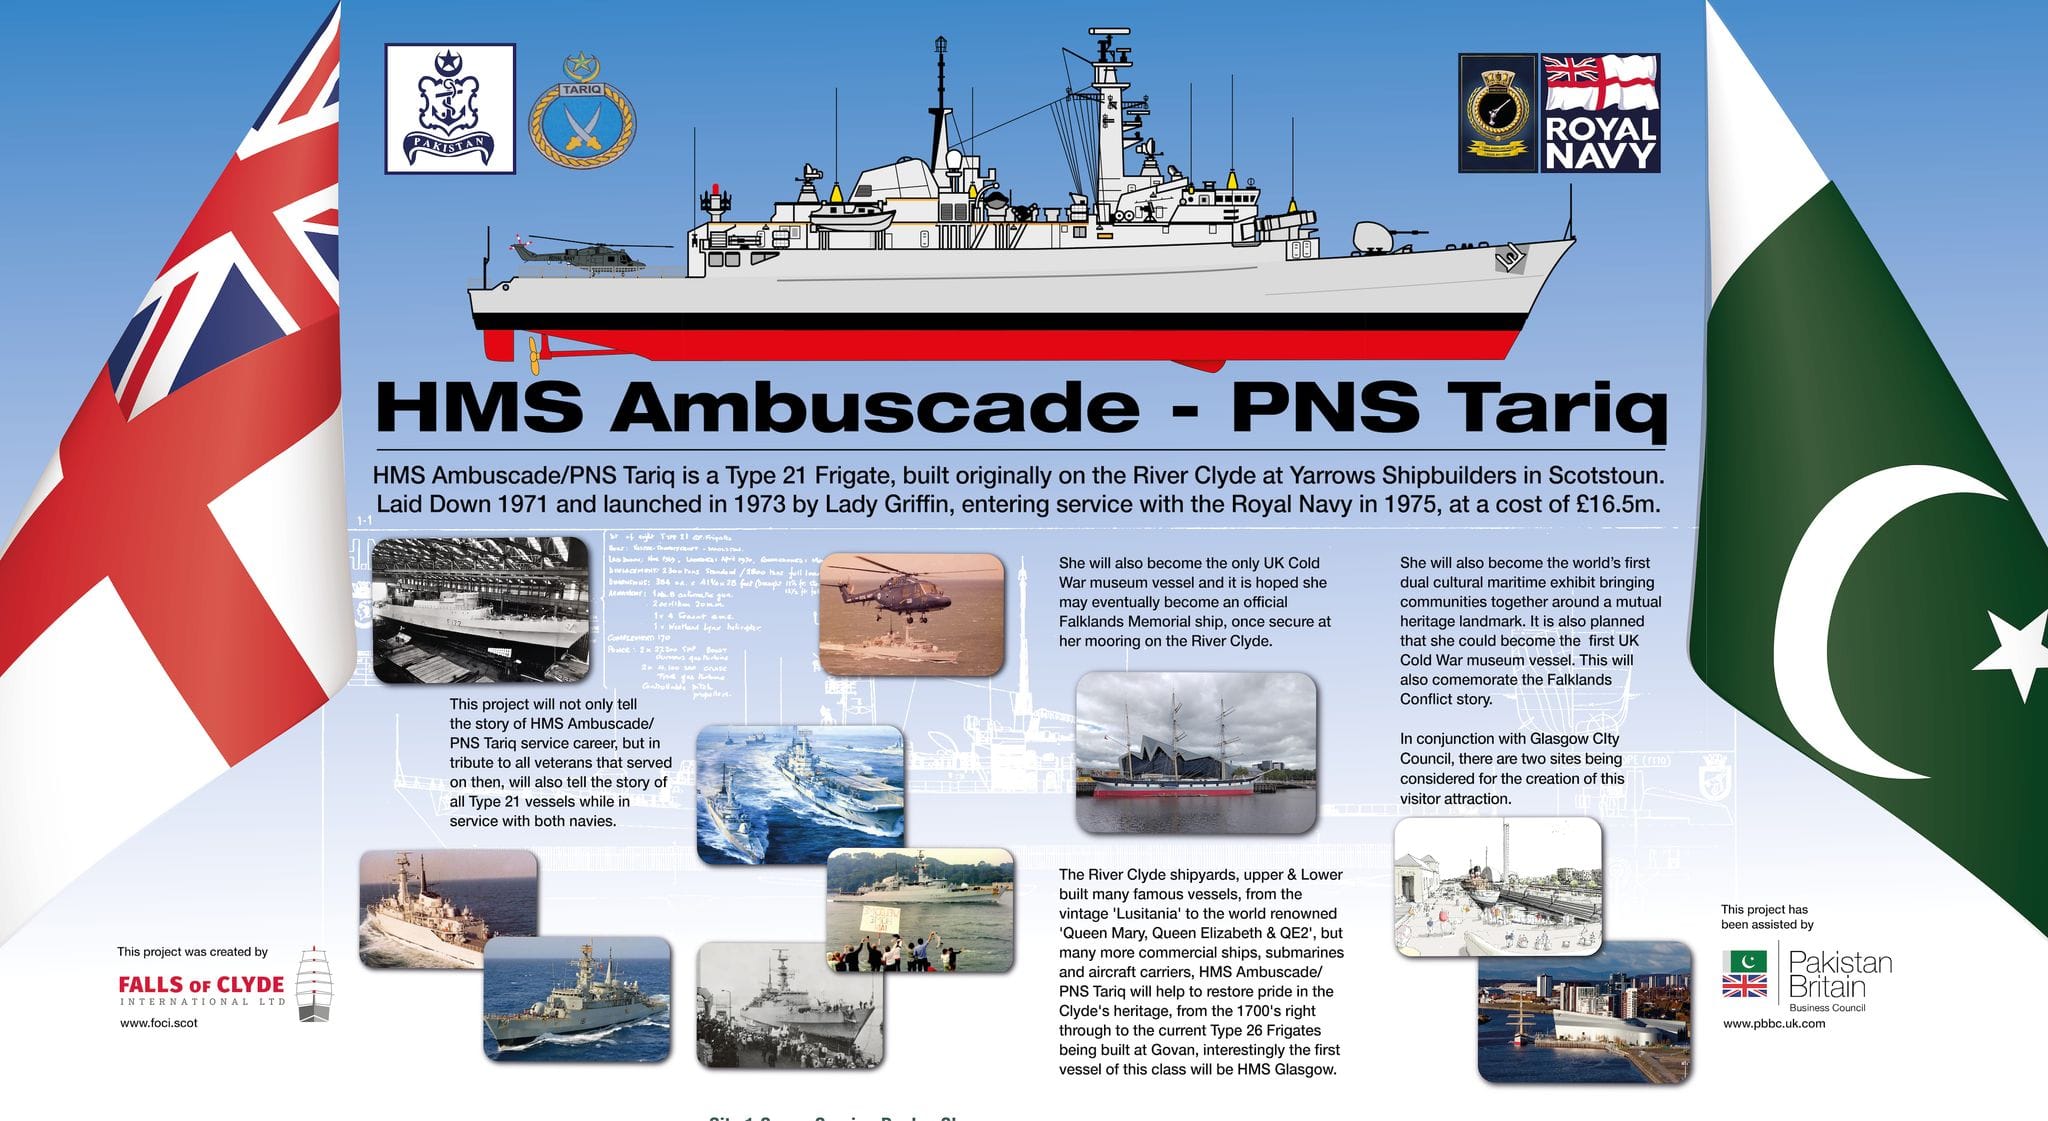 HMS Ambuscade plans